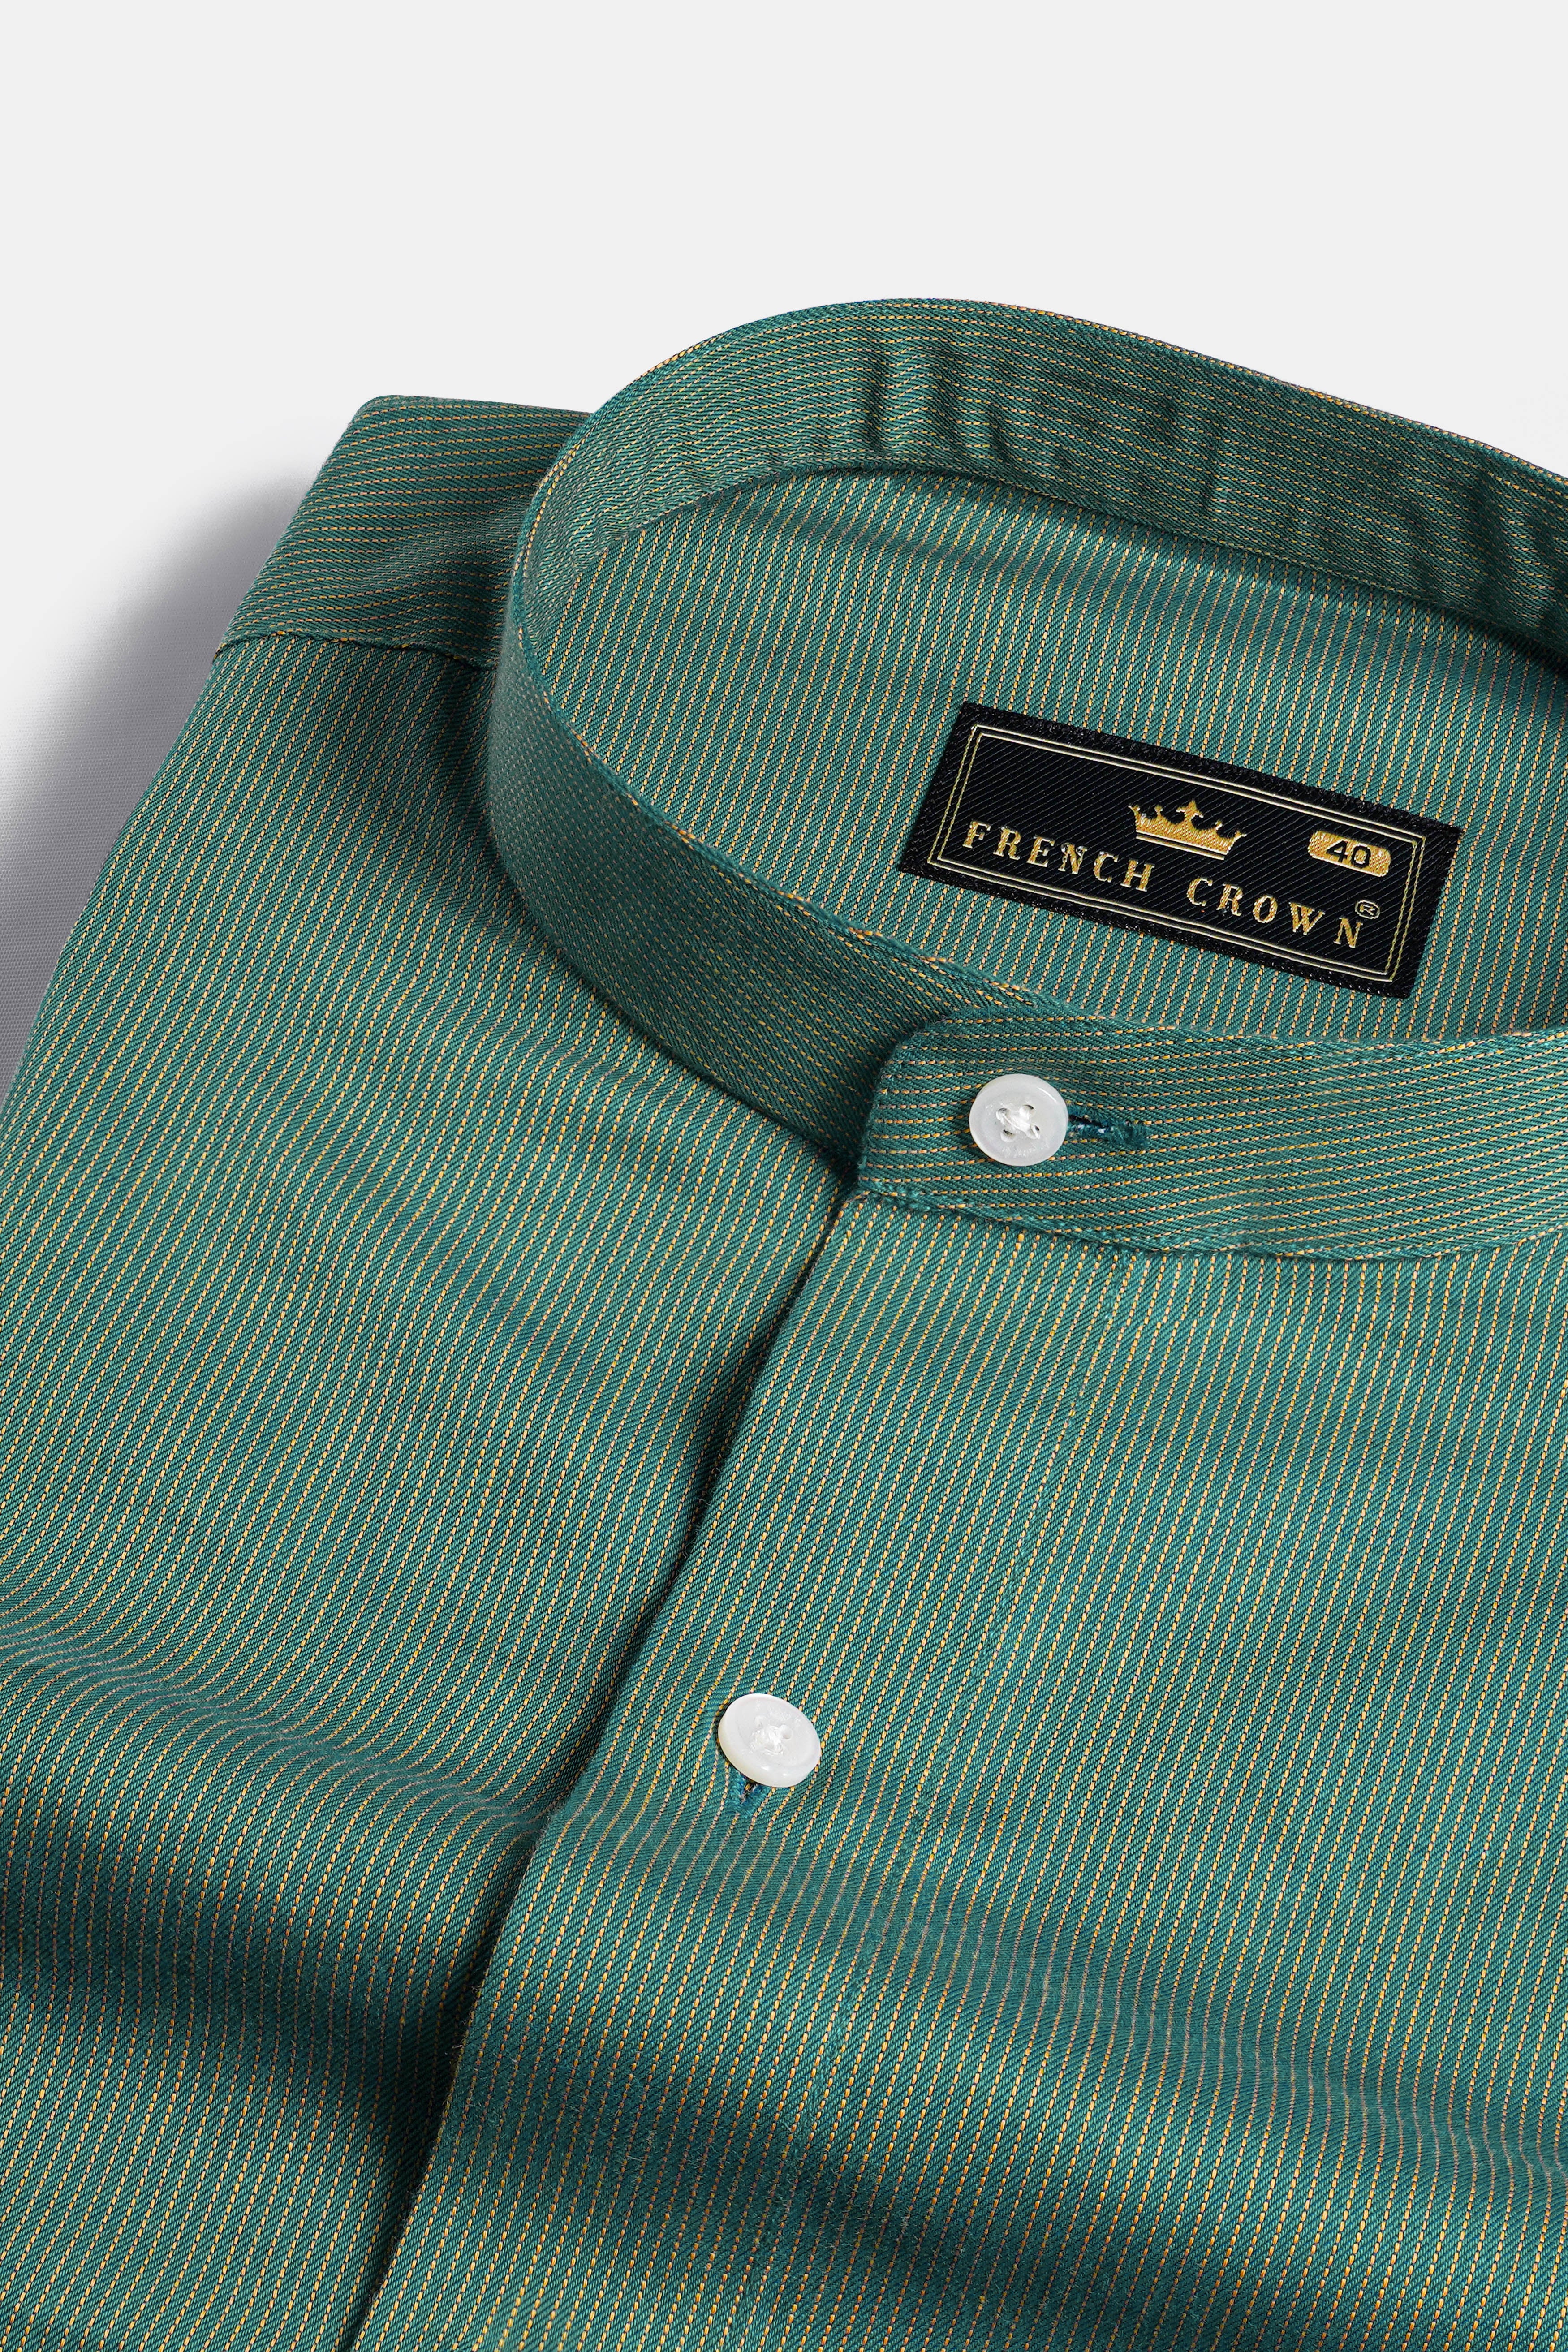 Aquamarine Green with Porche Yellow Two-Tone Jacquard Textured Premium Giza Cotton Shirt